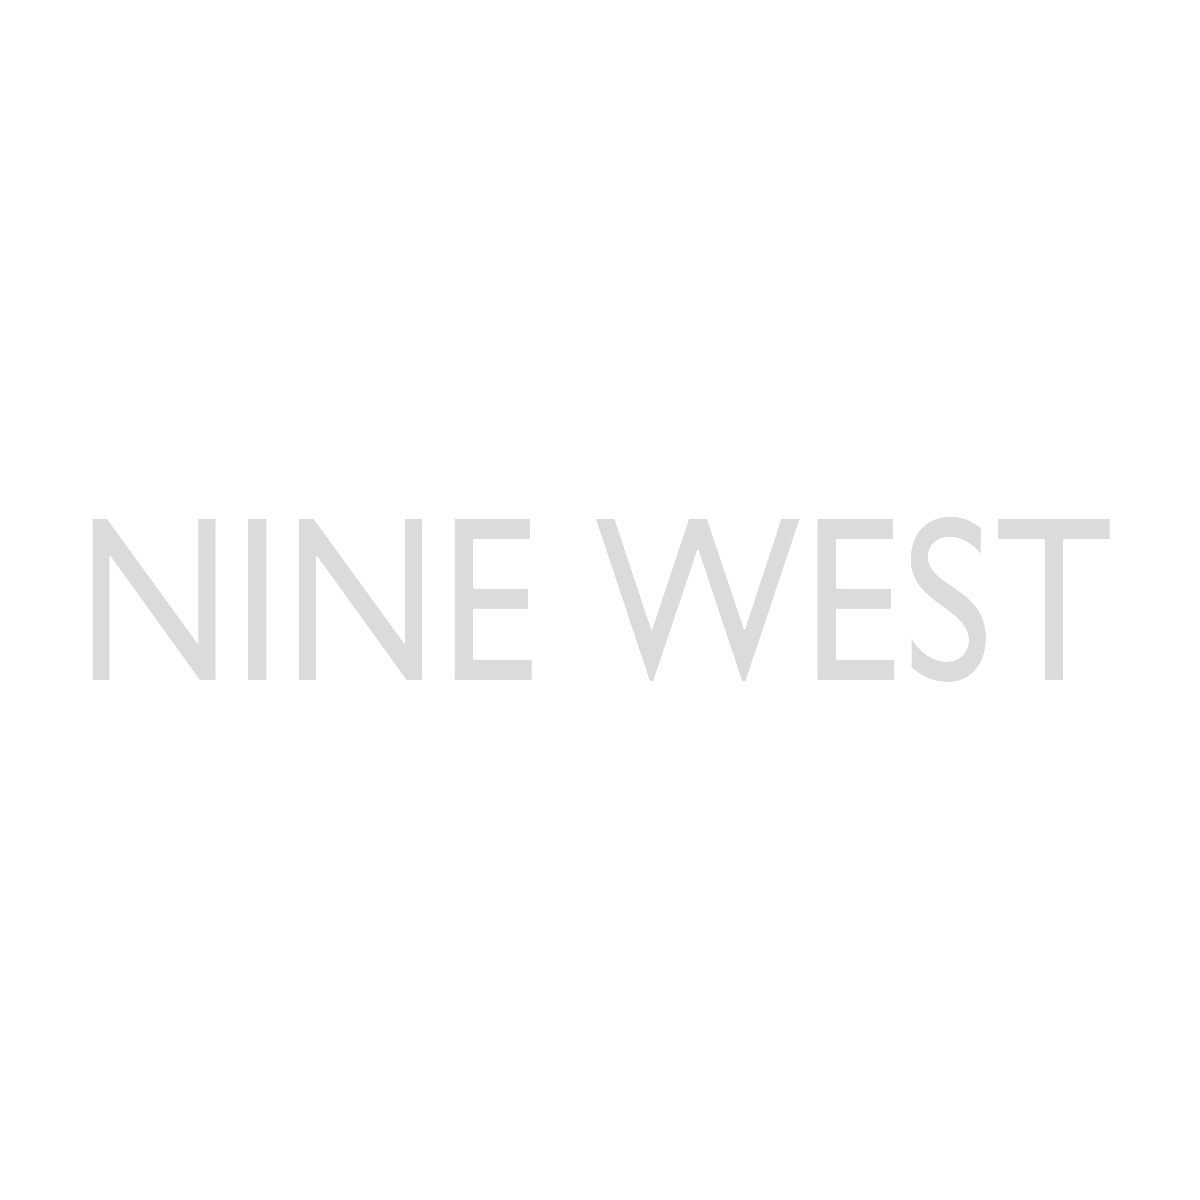 nine west fatrina